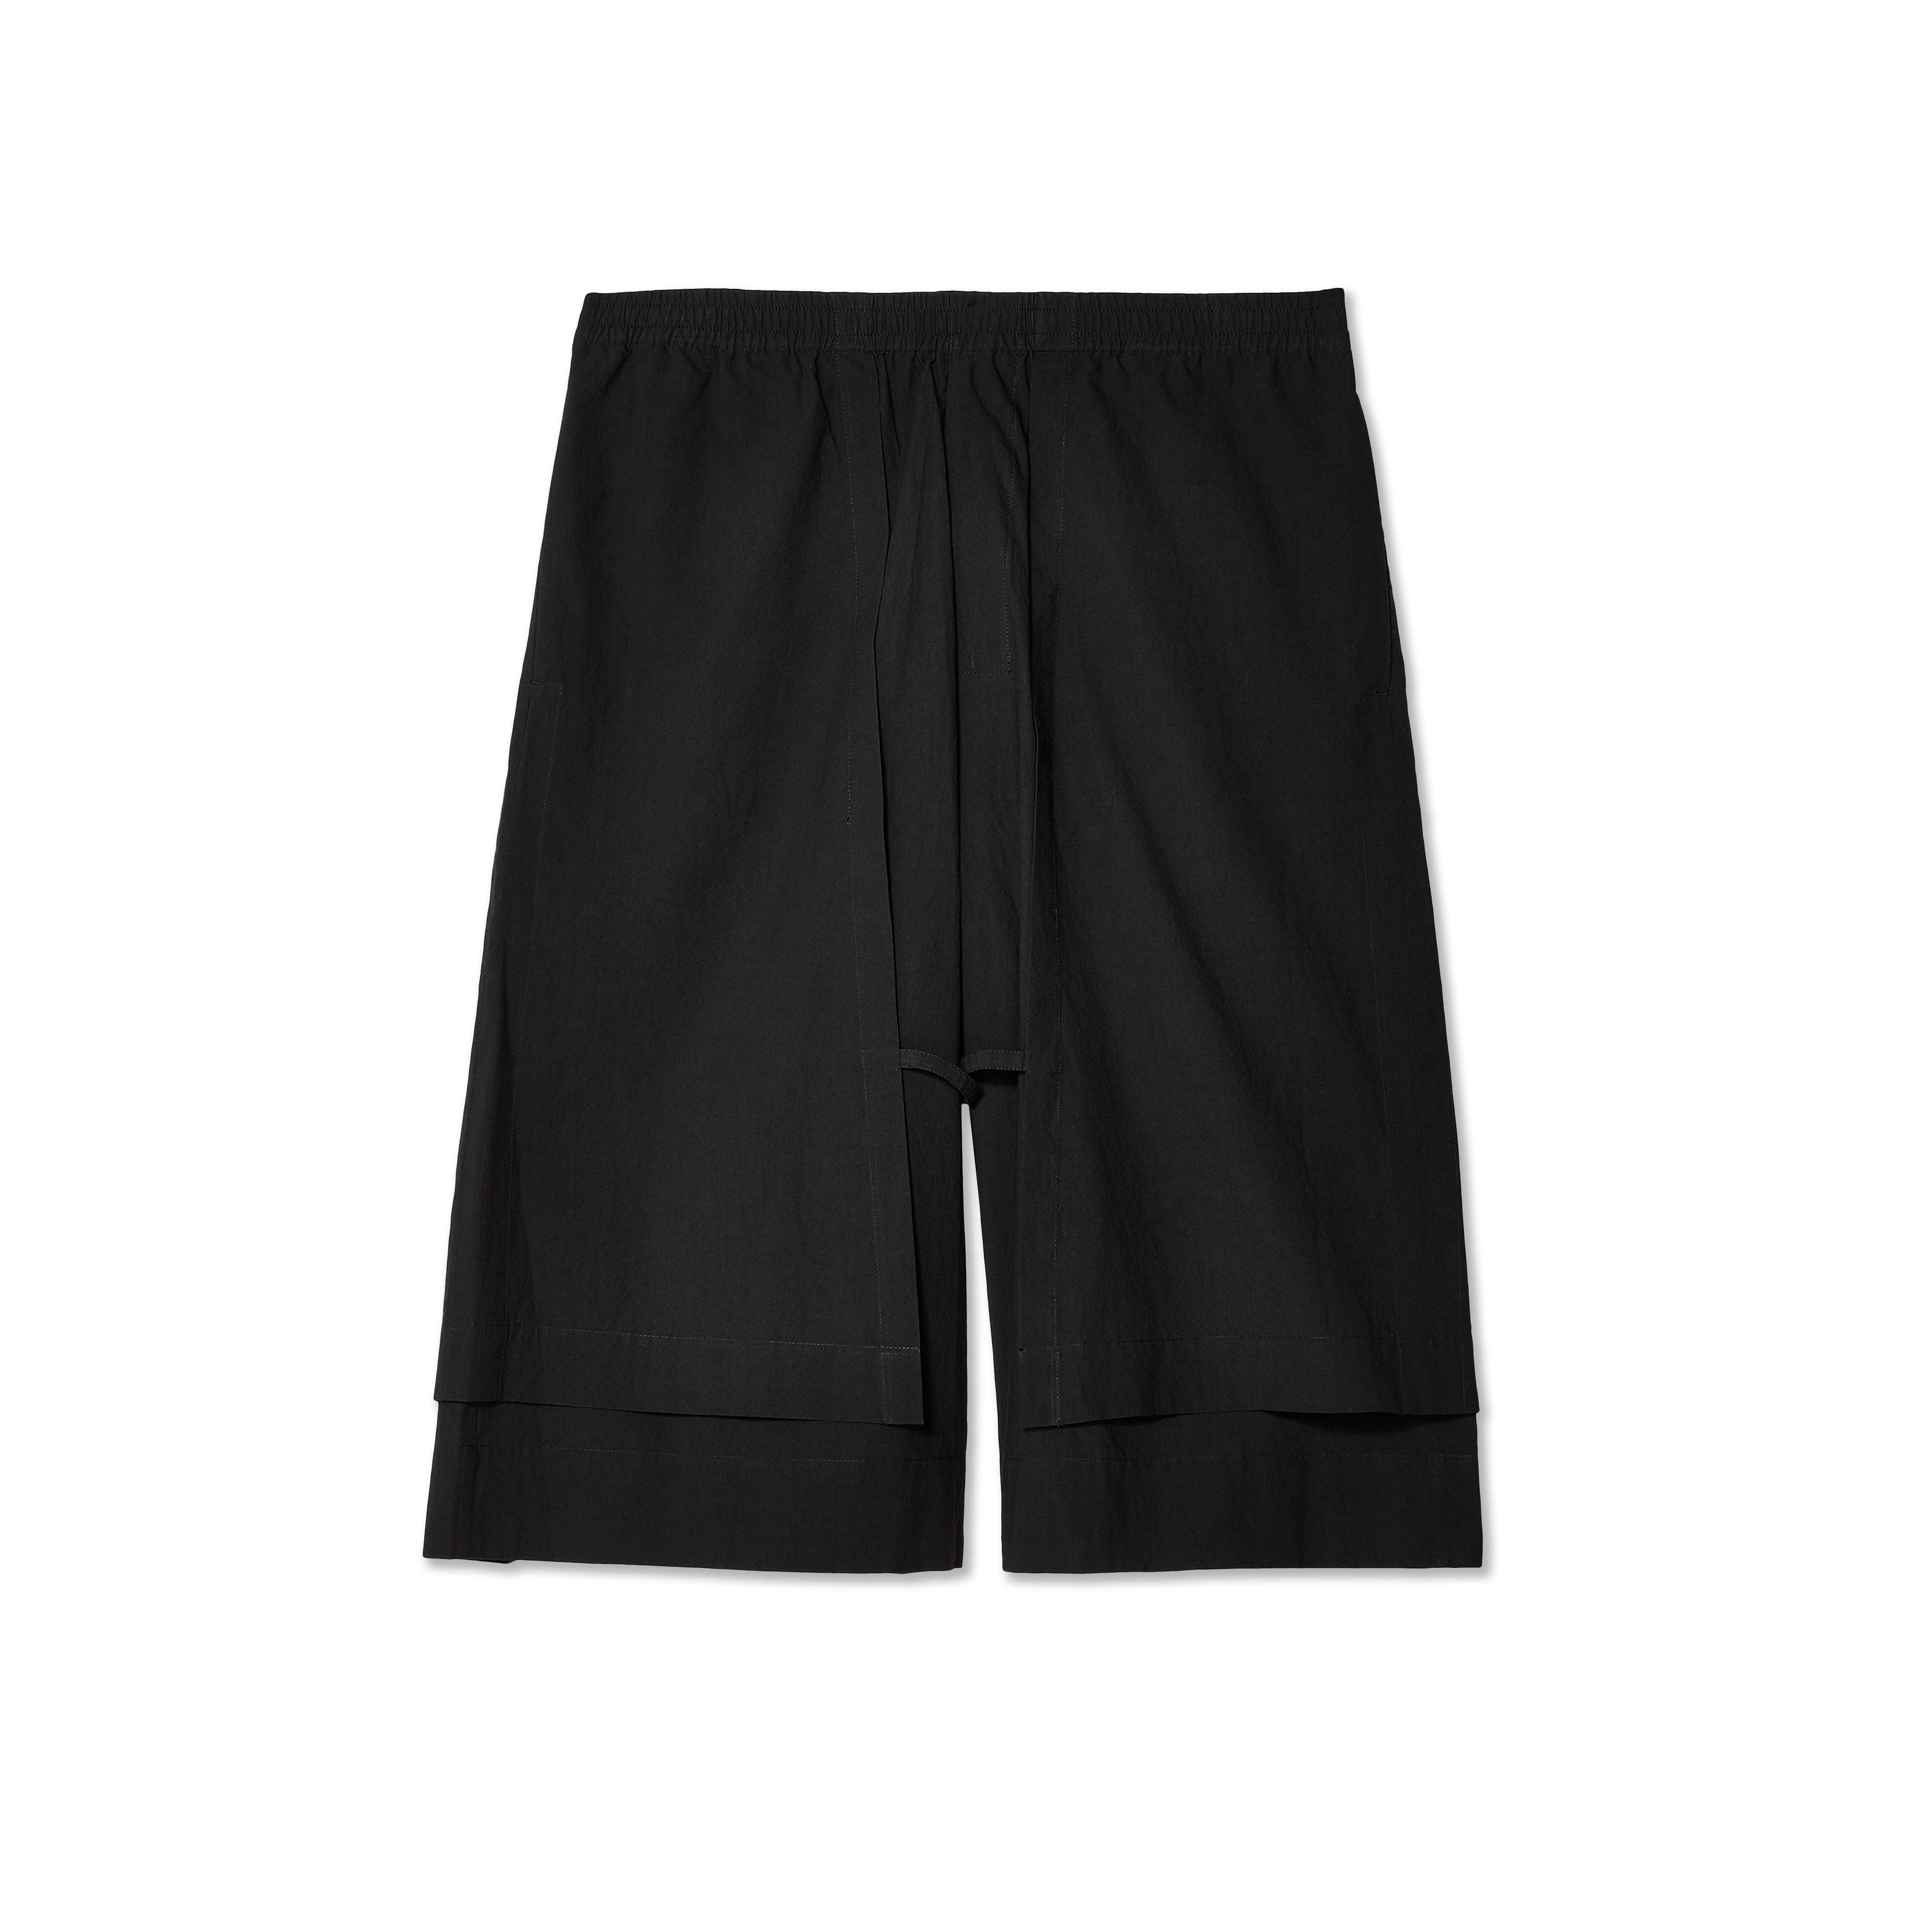 Craig Green Men's Worker Shorts (Black) by CGREEN